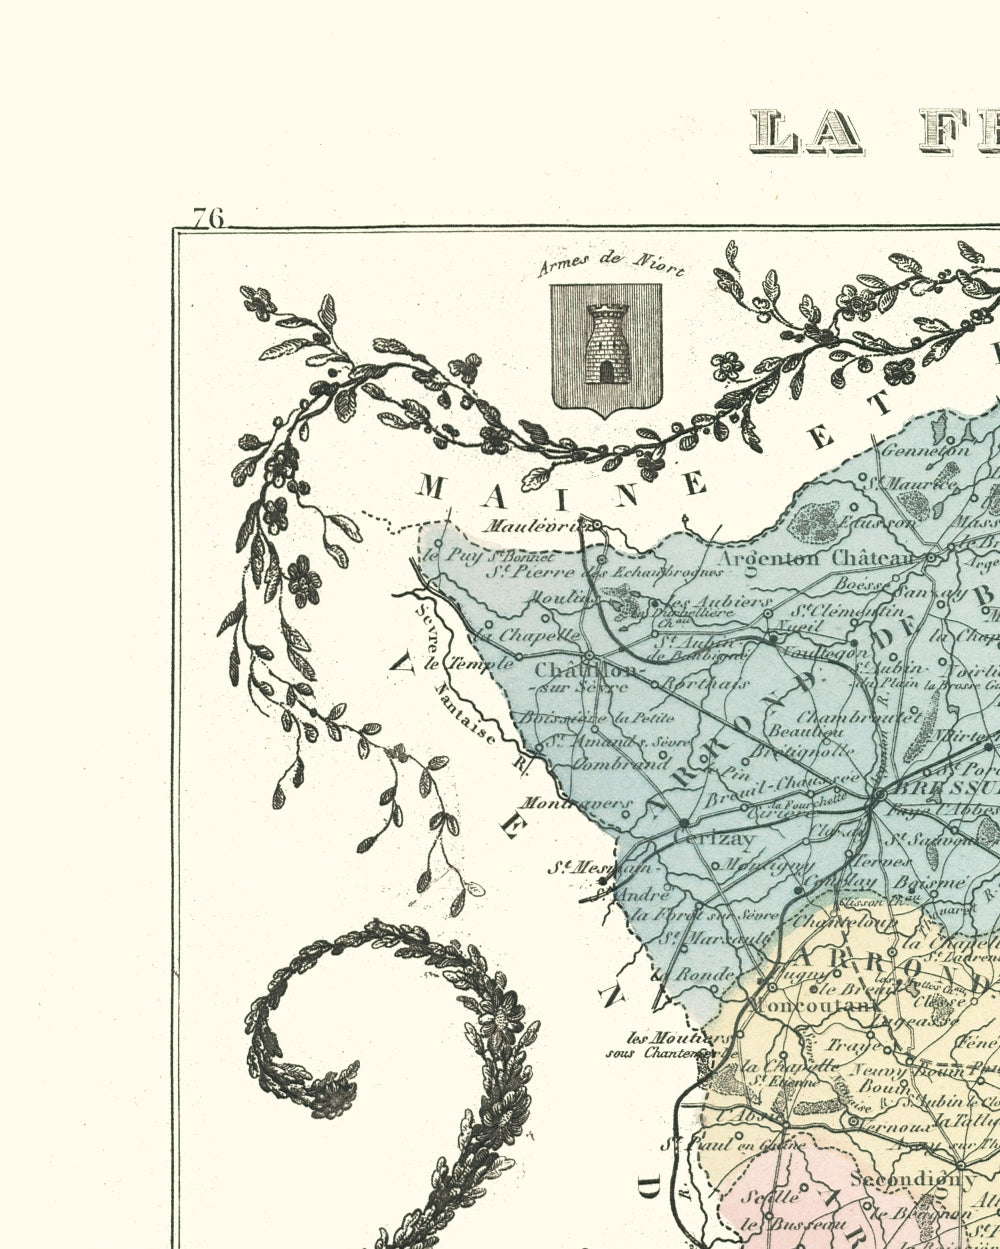 Historic Map - Deux Sevres Department France - Migeon 1869 - 23 x 28.74 - Vintage Wall Art